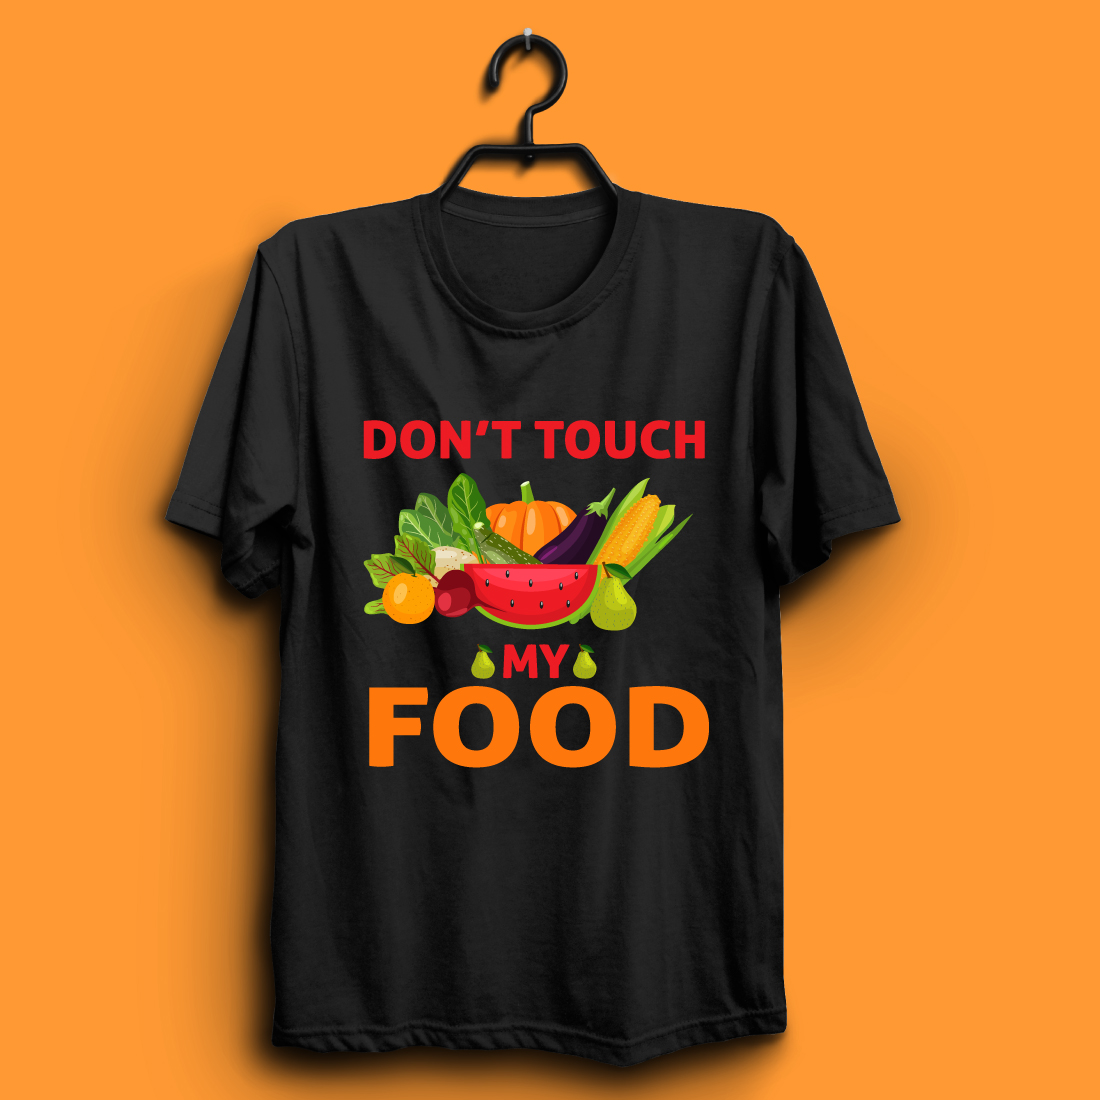 food t shirt design01 194